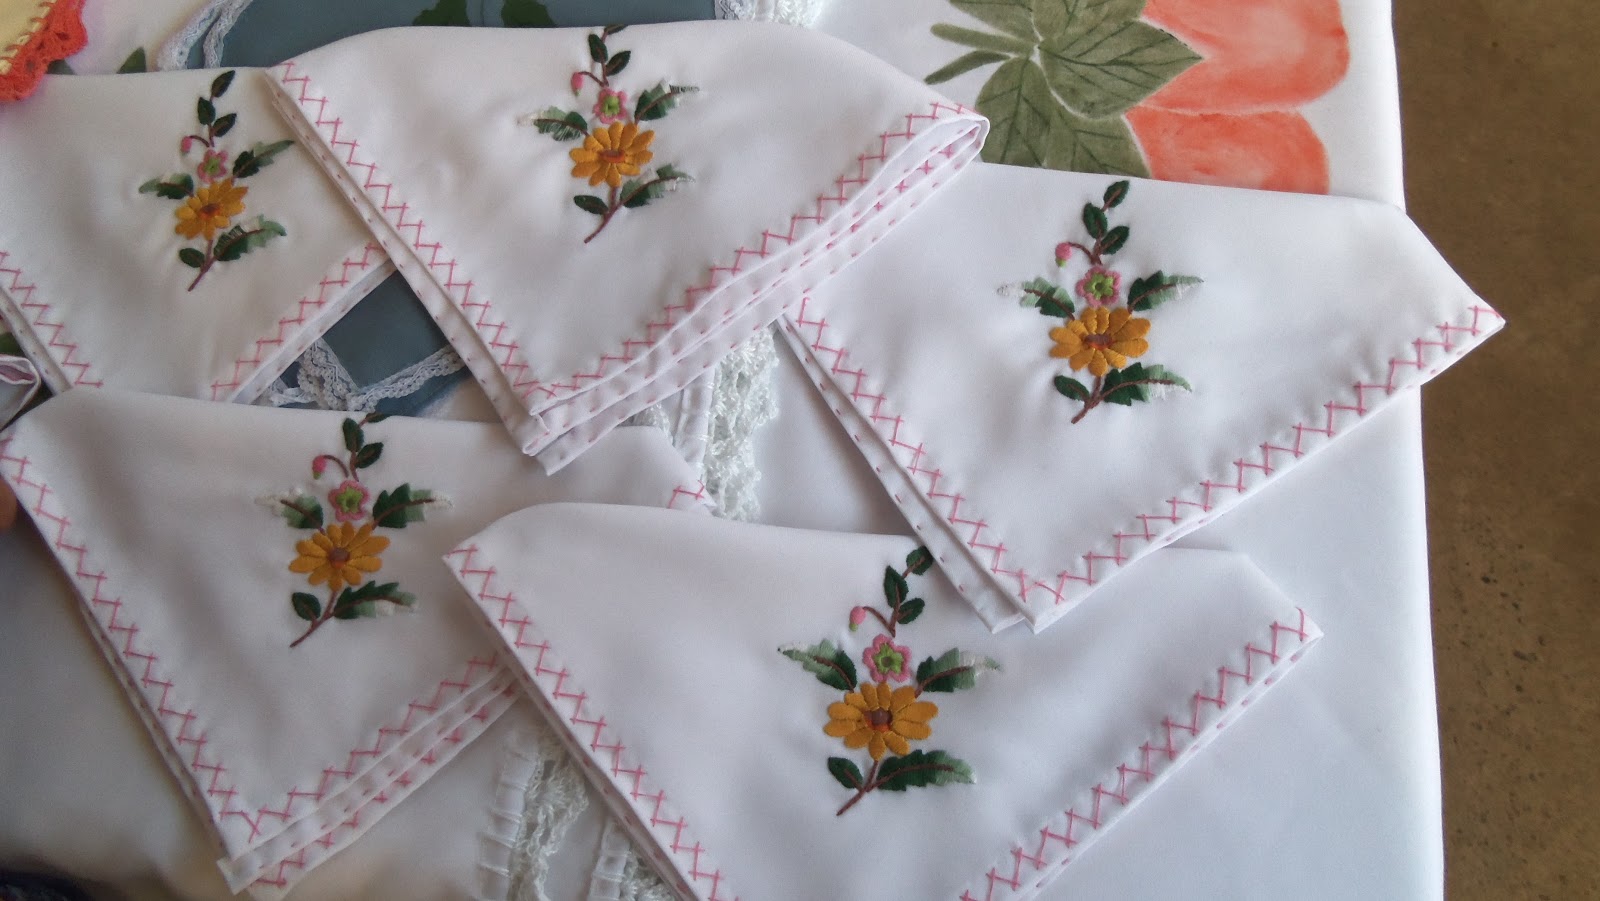 hala al turk hd wallpaper,needlework,handkerchief,napkin,textile,tablecloth